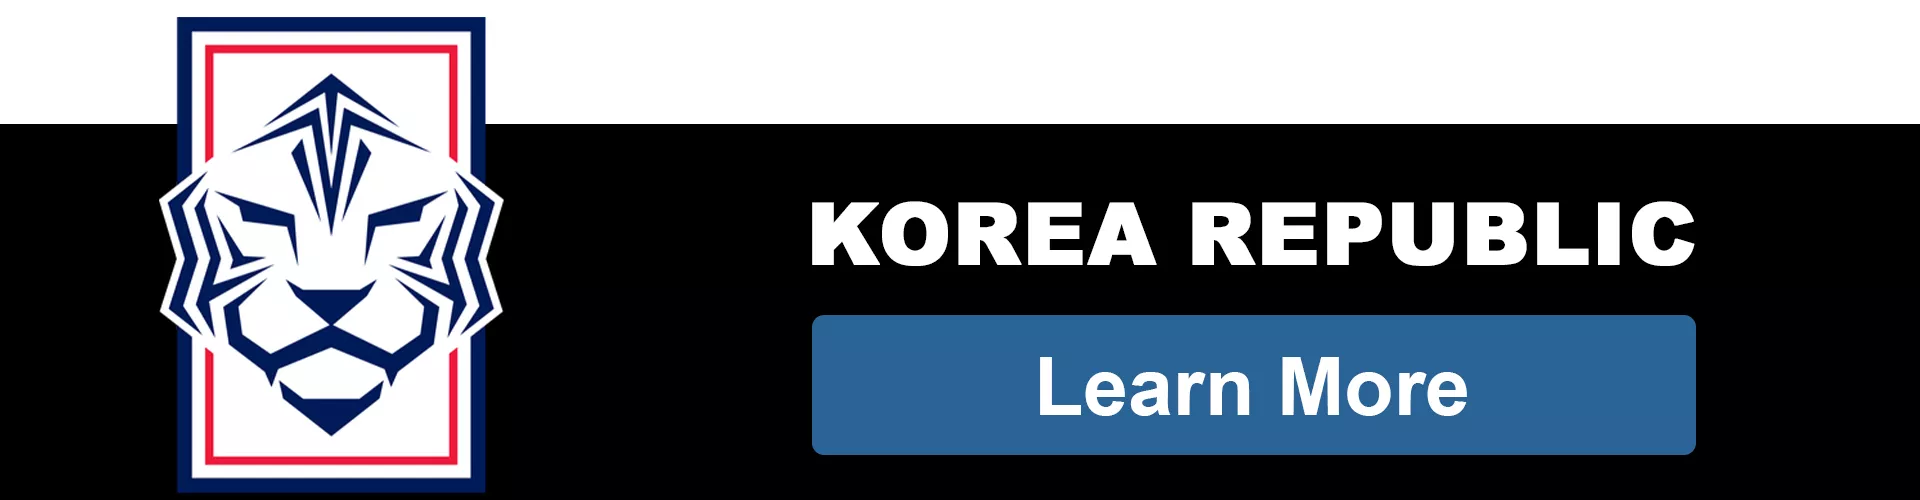 South Korea National Football Team - bestsoccerstore